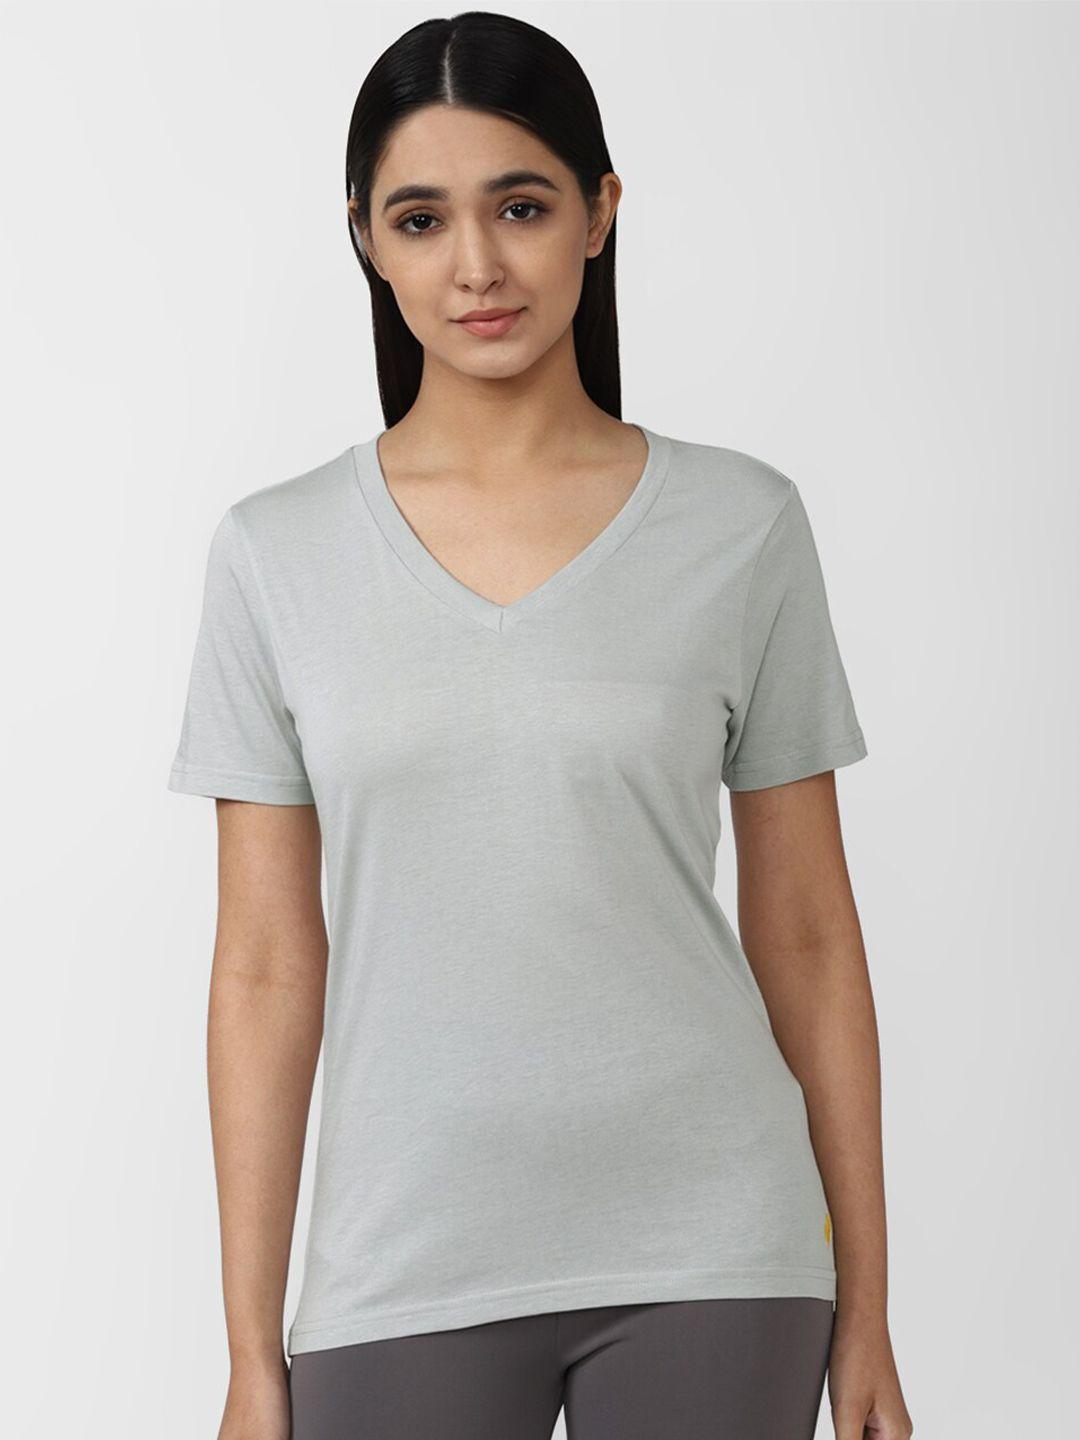 forever-21-women-grey-v-neck-solid-t-shirt